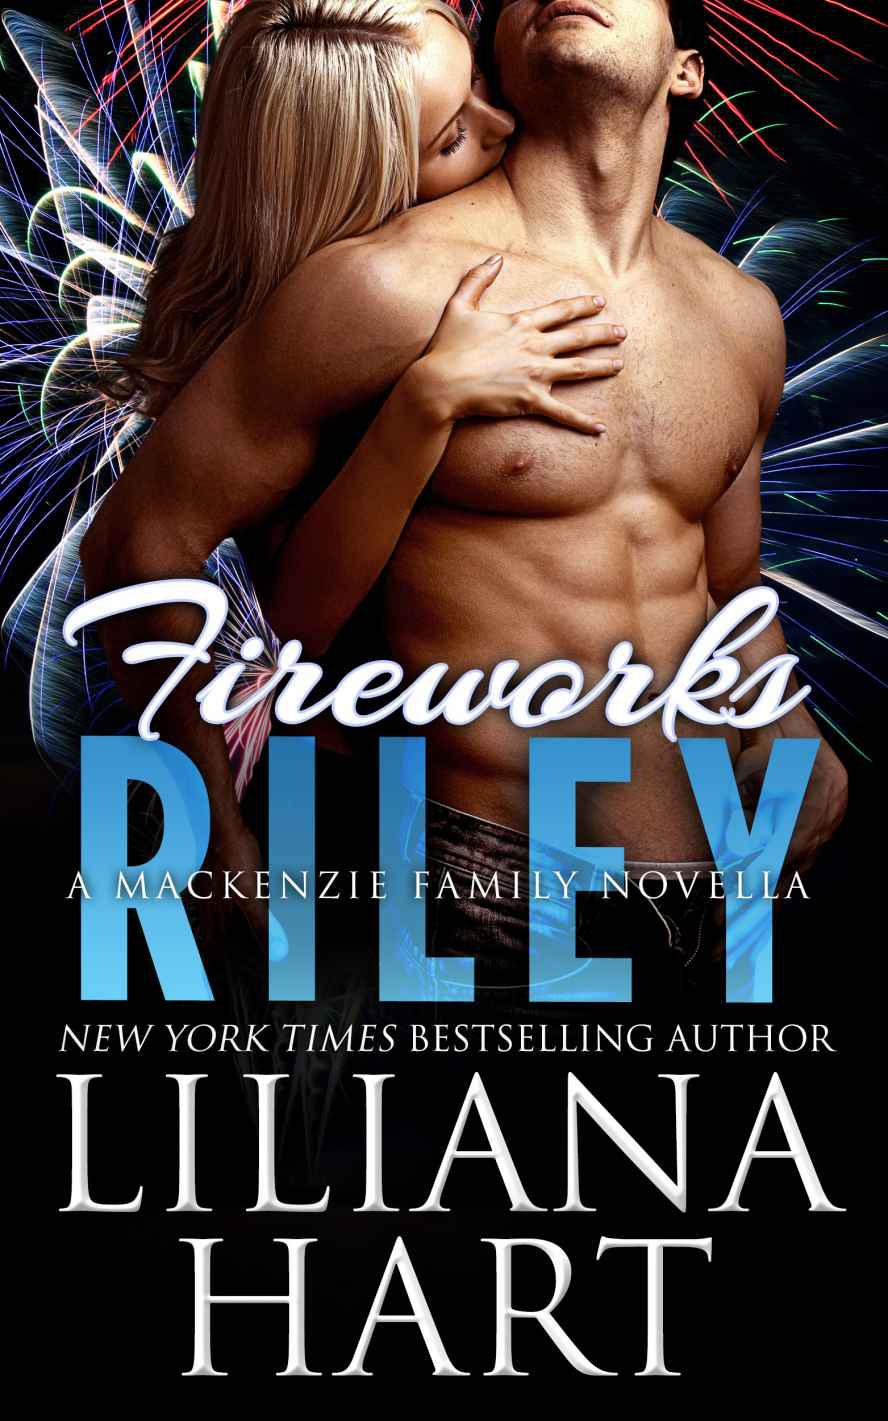 Fireworks: Riley by Liliana Hart